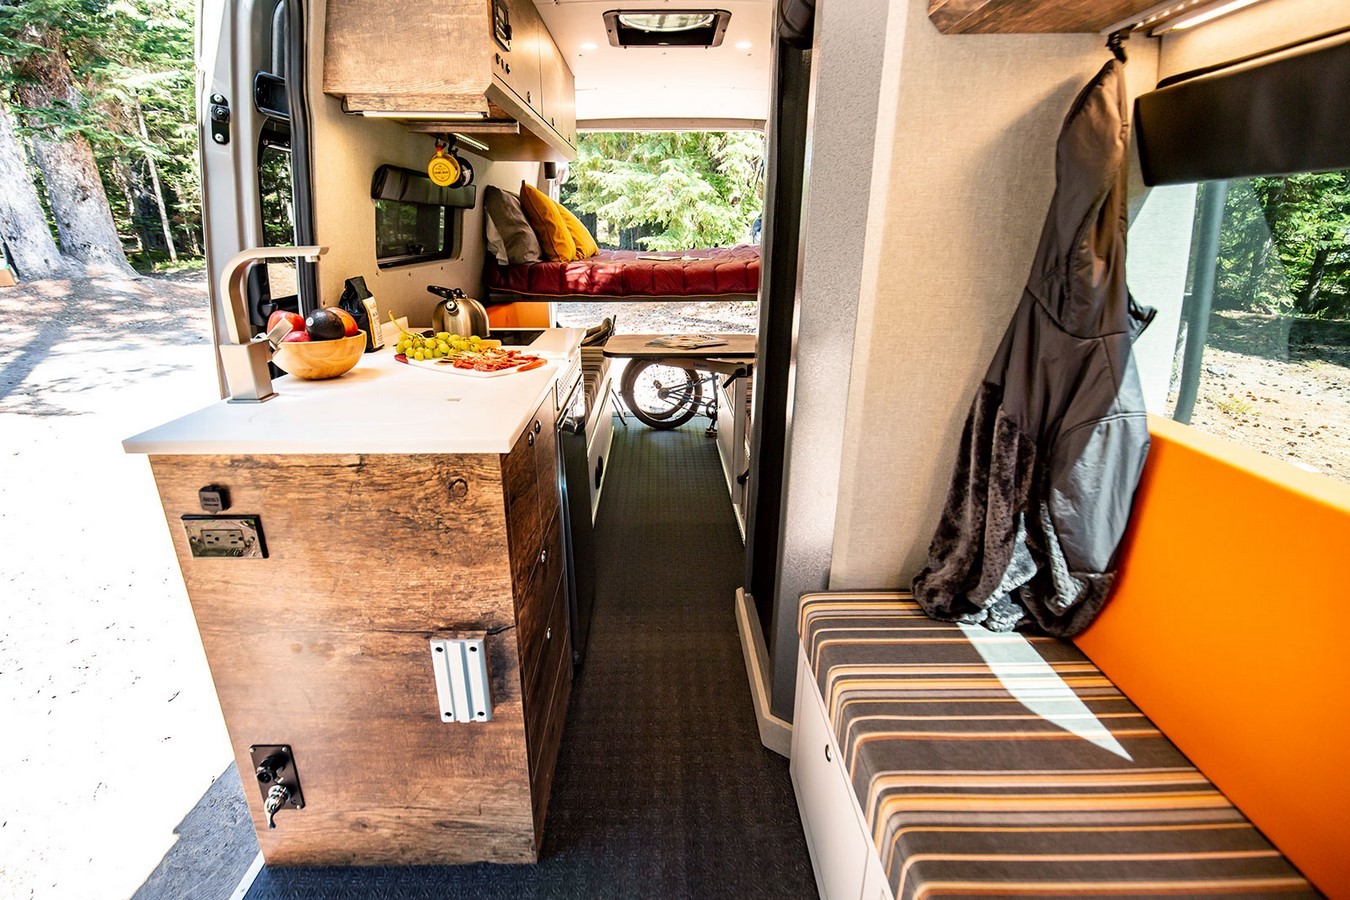 10 Van companies fulfilling the travel needs through their designs - Sheet8